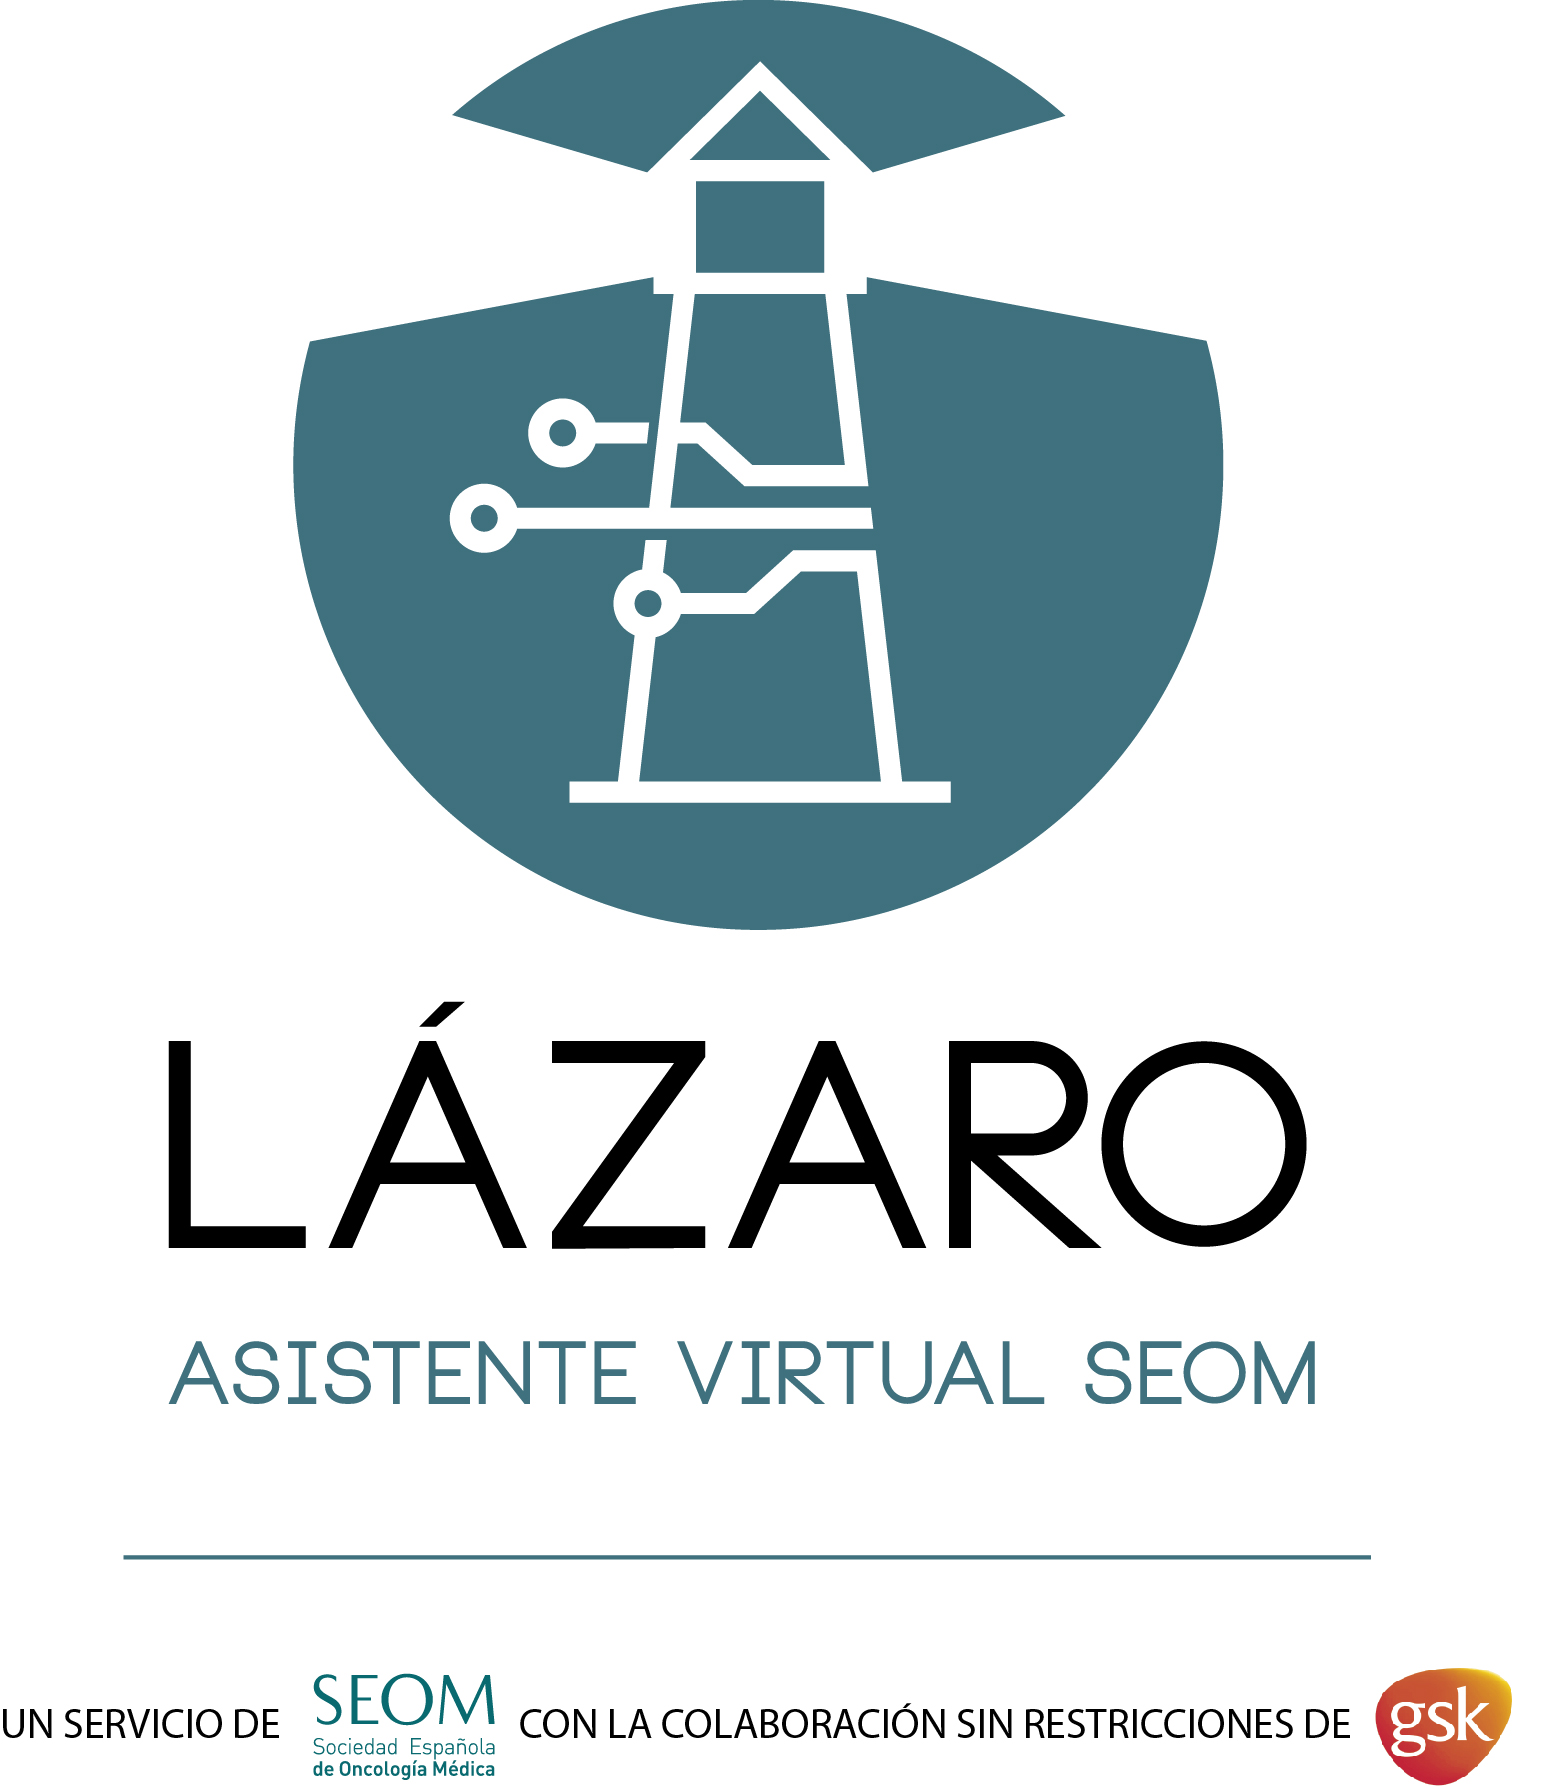 Lazaro Asistente Virtual SEOM